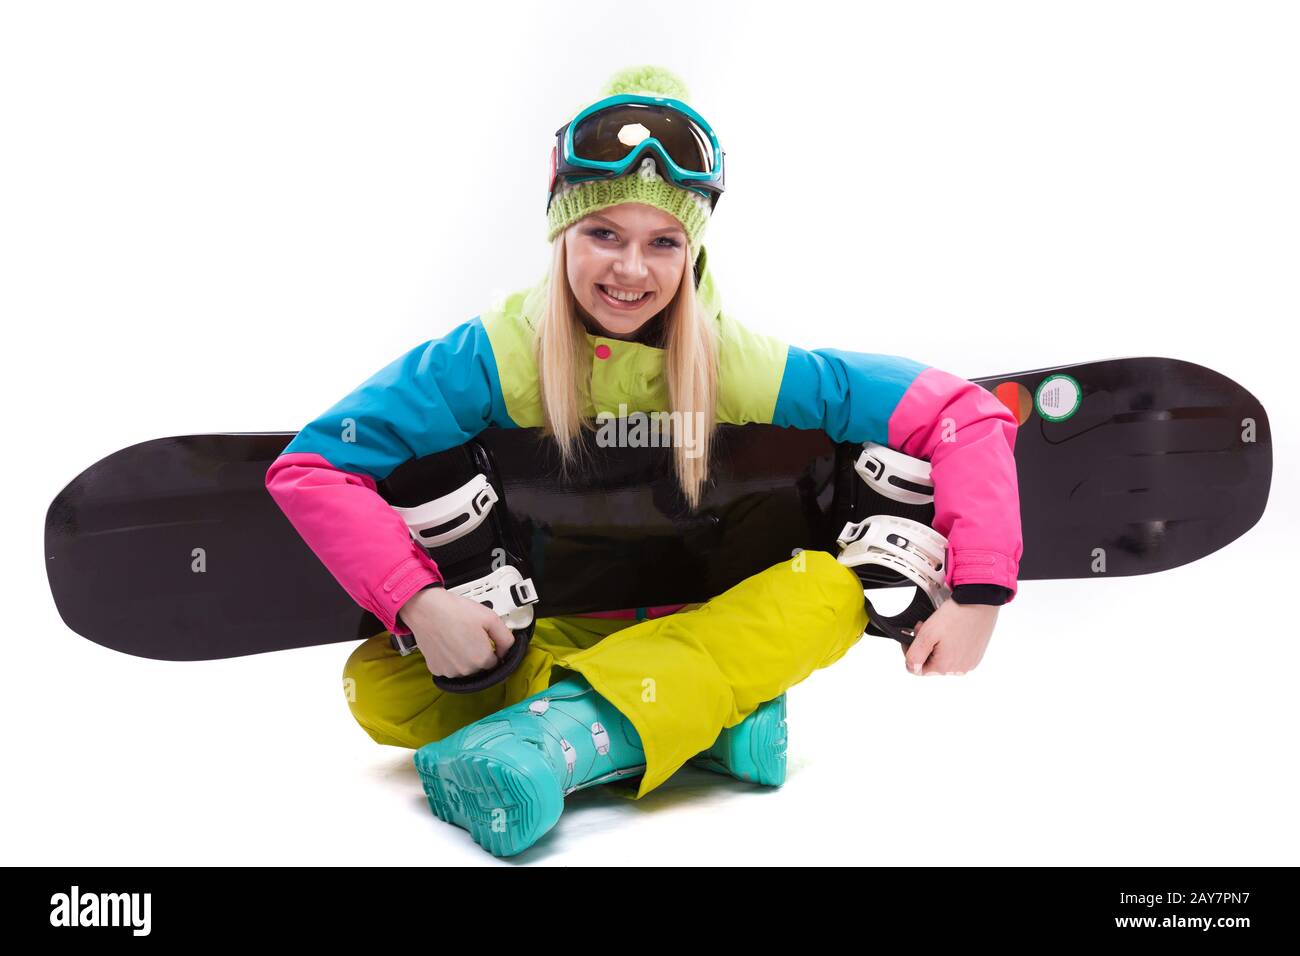 Snowboard costume Imágenes recortadas de stock - Alamy